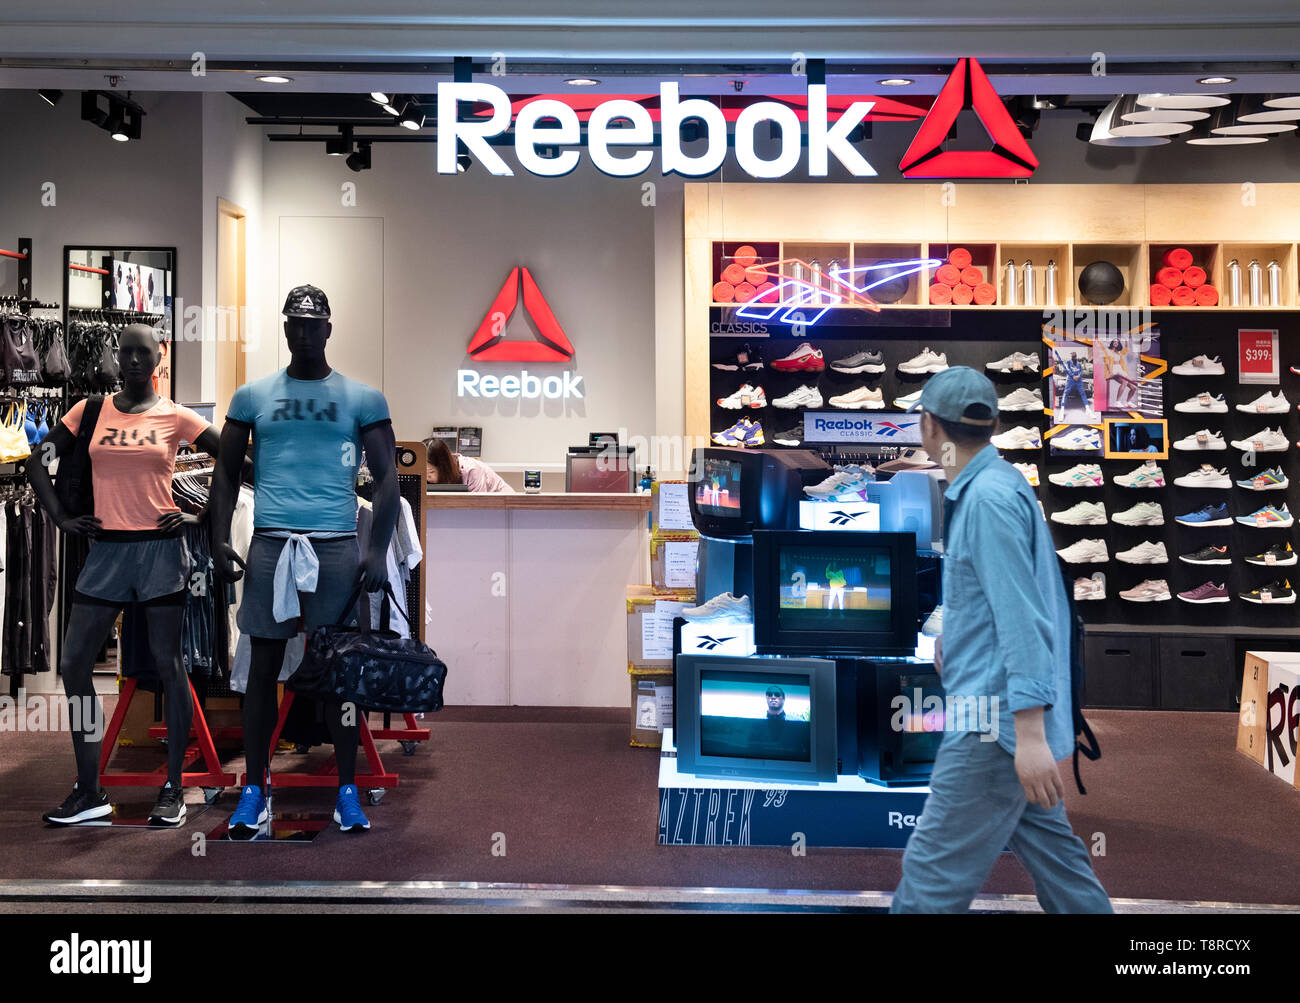 reebok clothing store